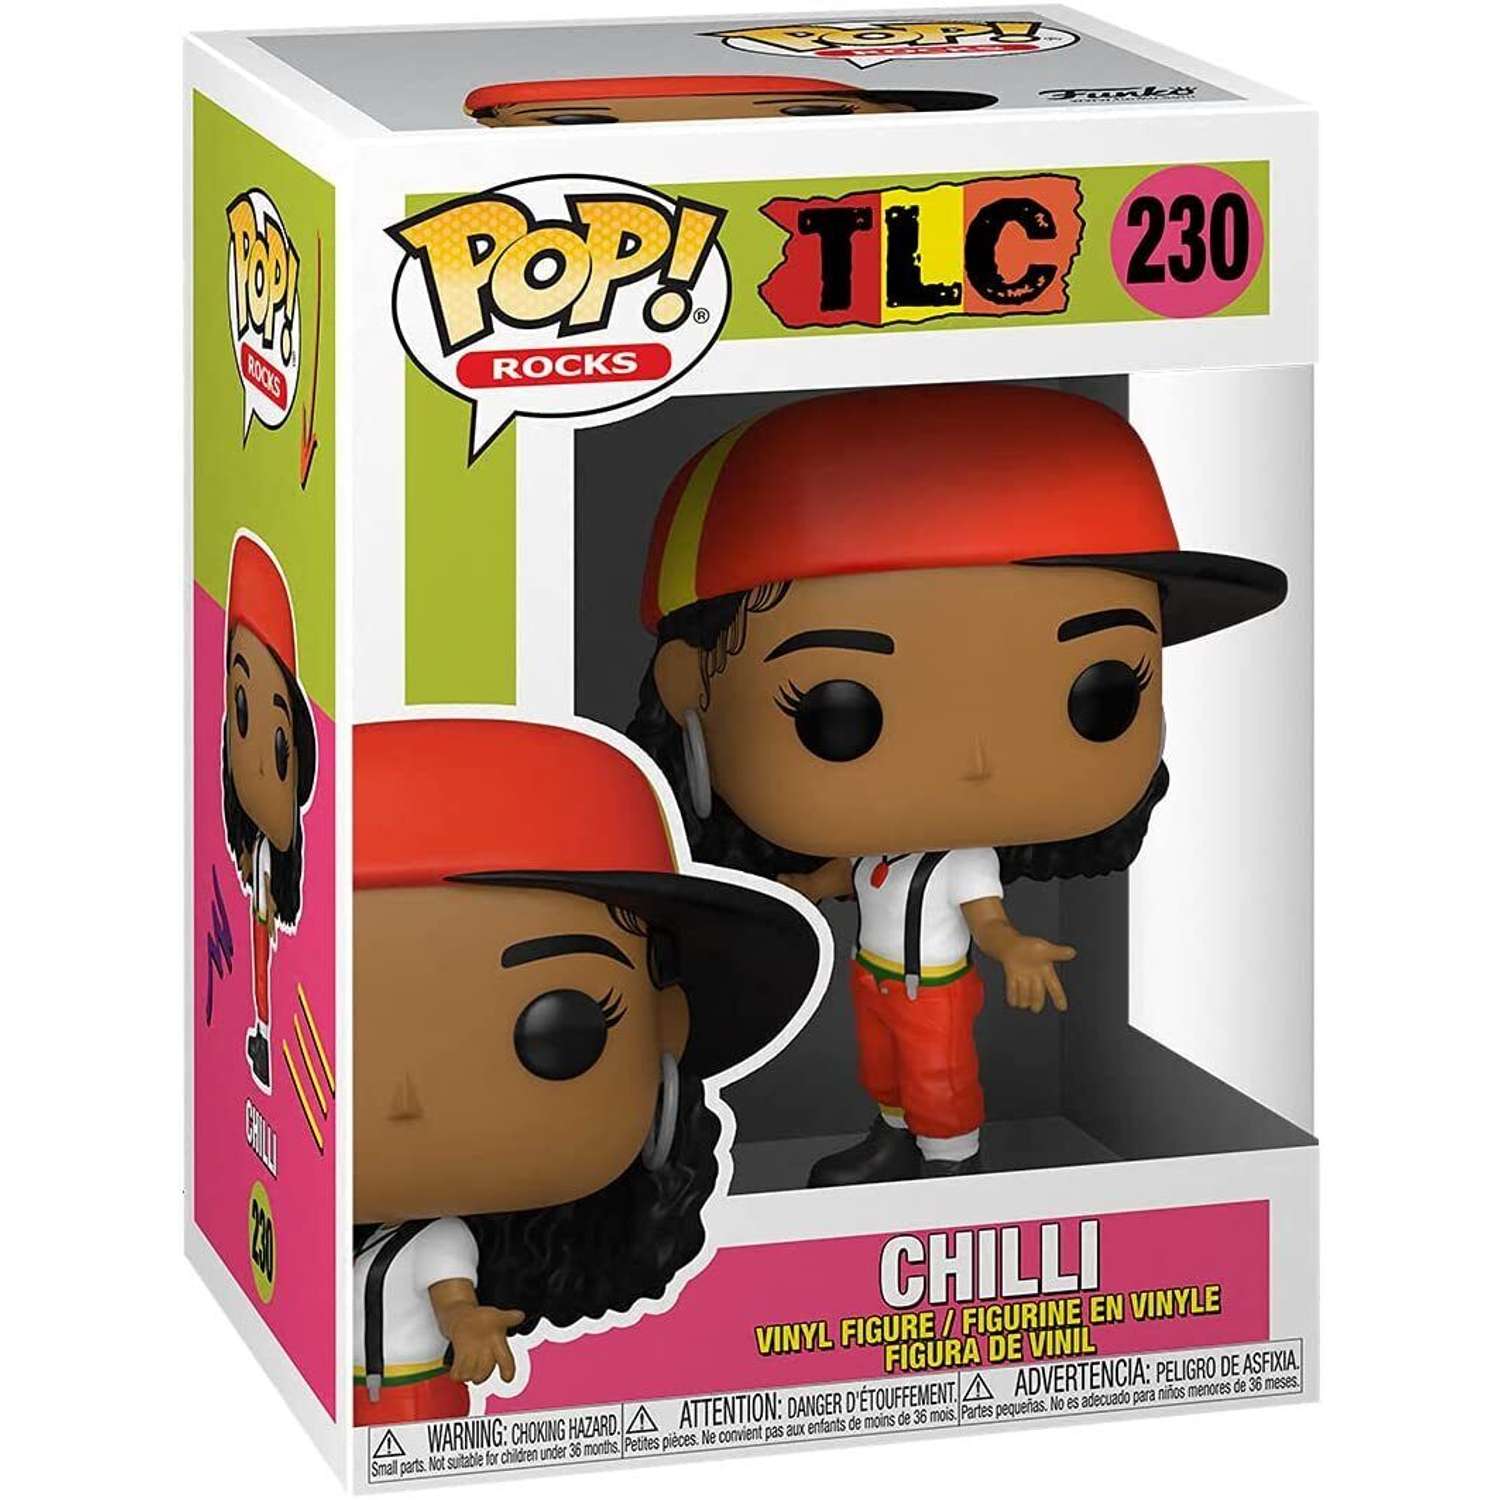 Фигурка Funko POP! Rocks Чилли Chilli из группы TLC - фото 2